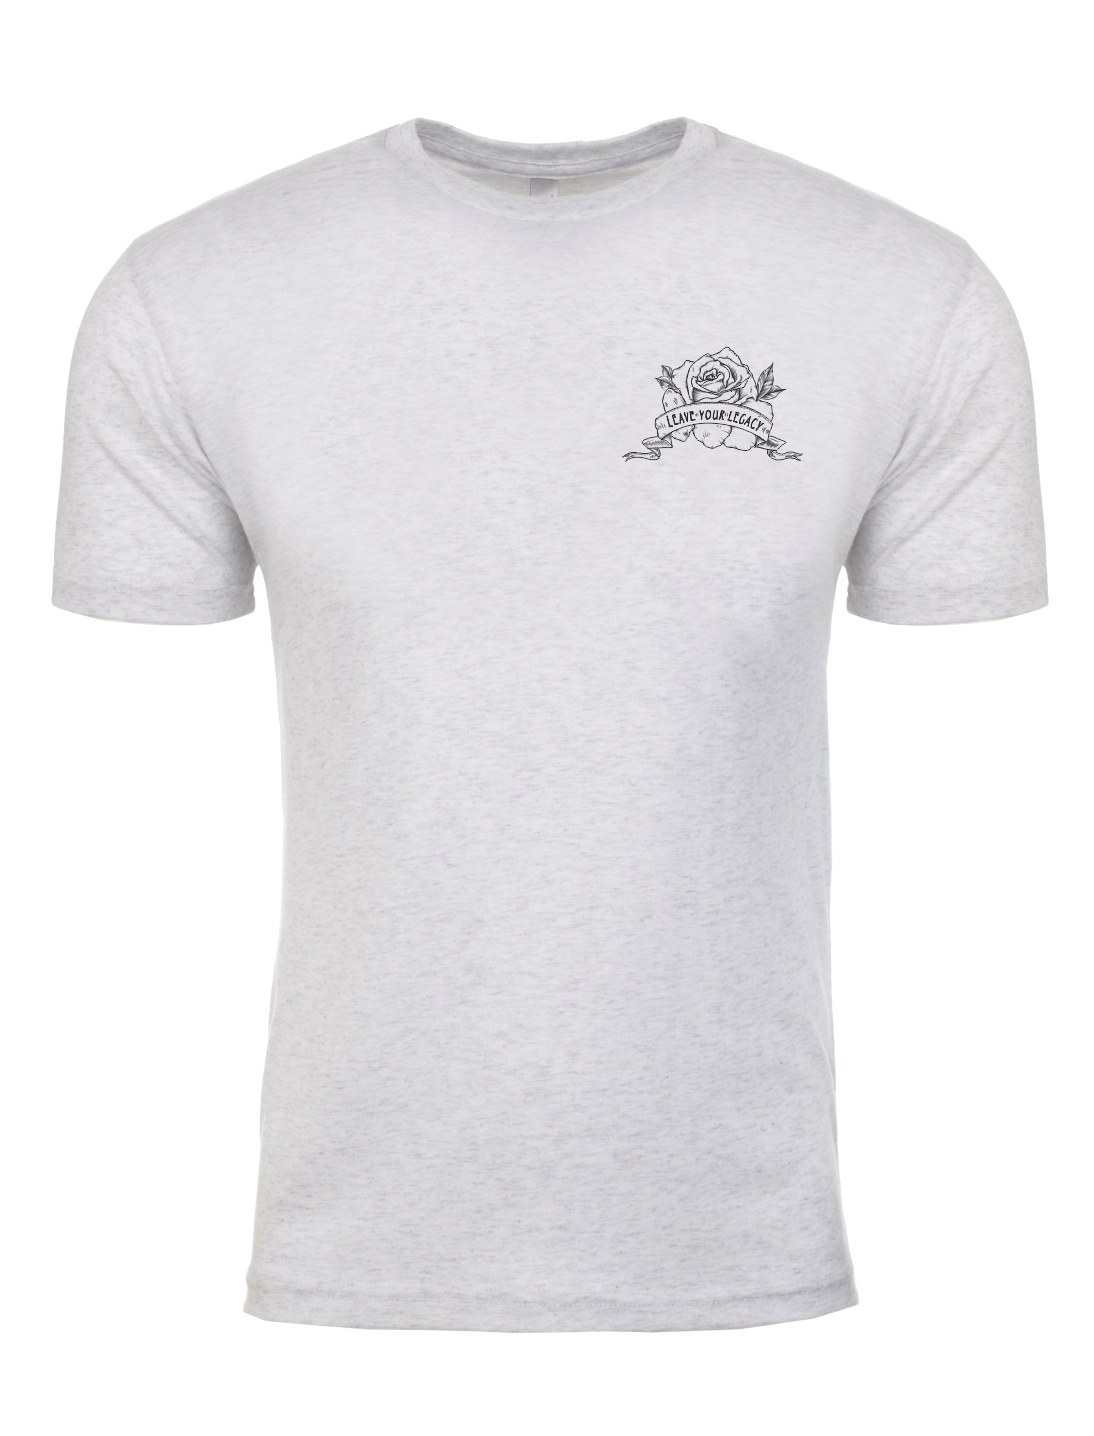 Unisex Premium T-Shirts | Leave Your Legacy Clothing